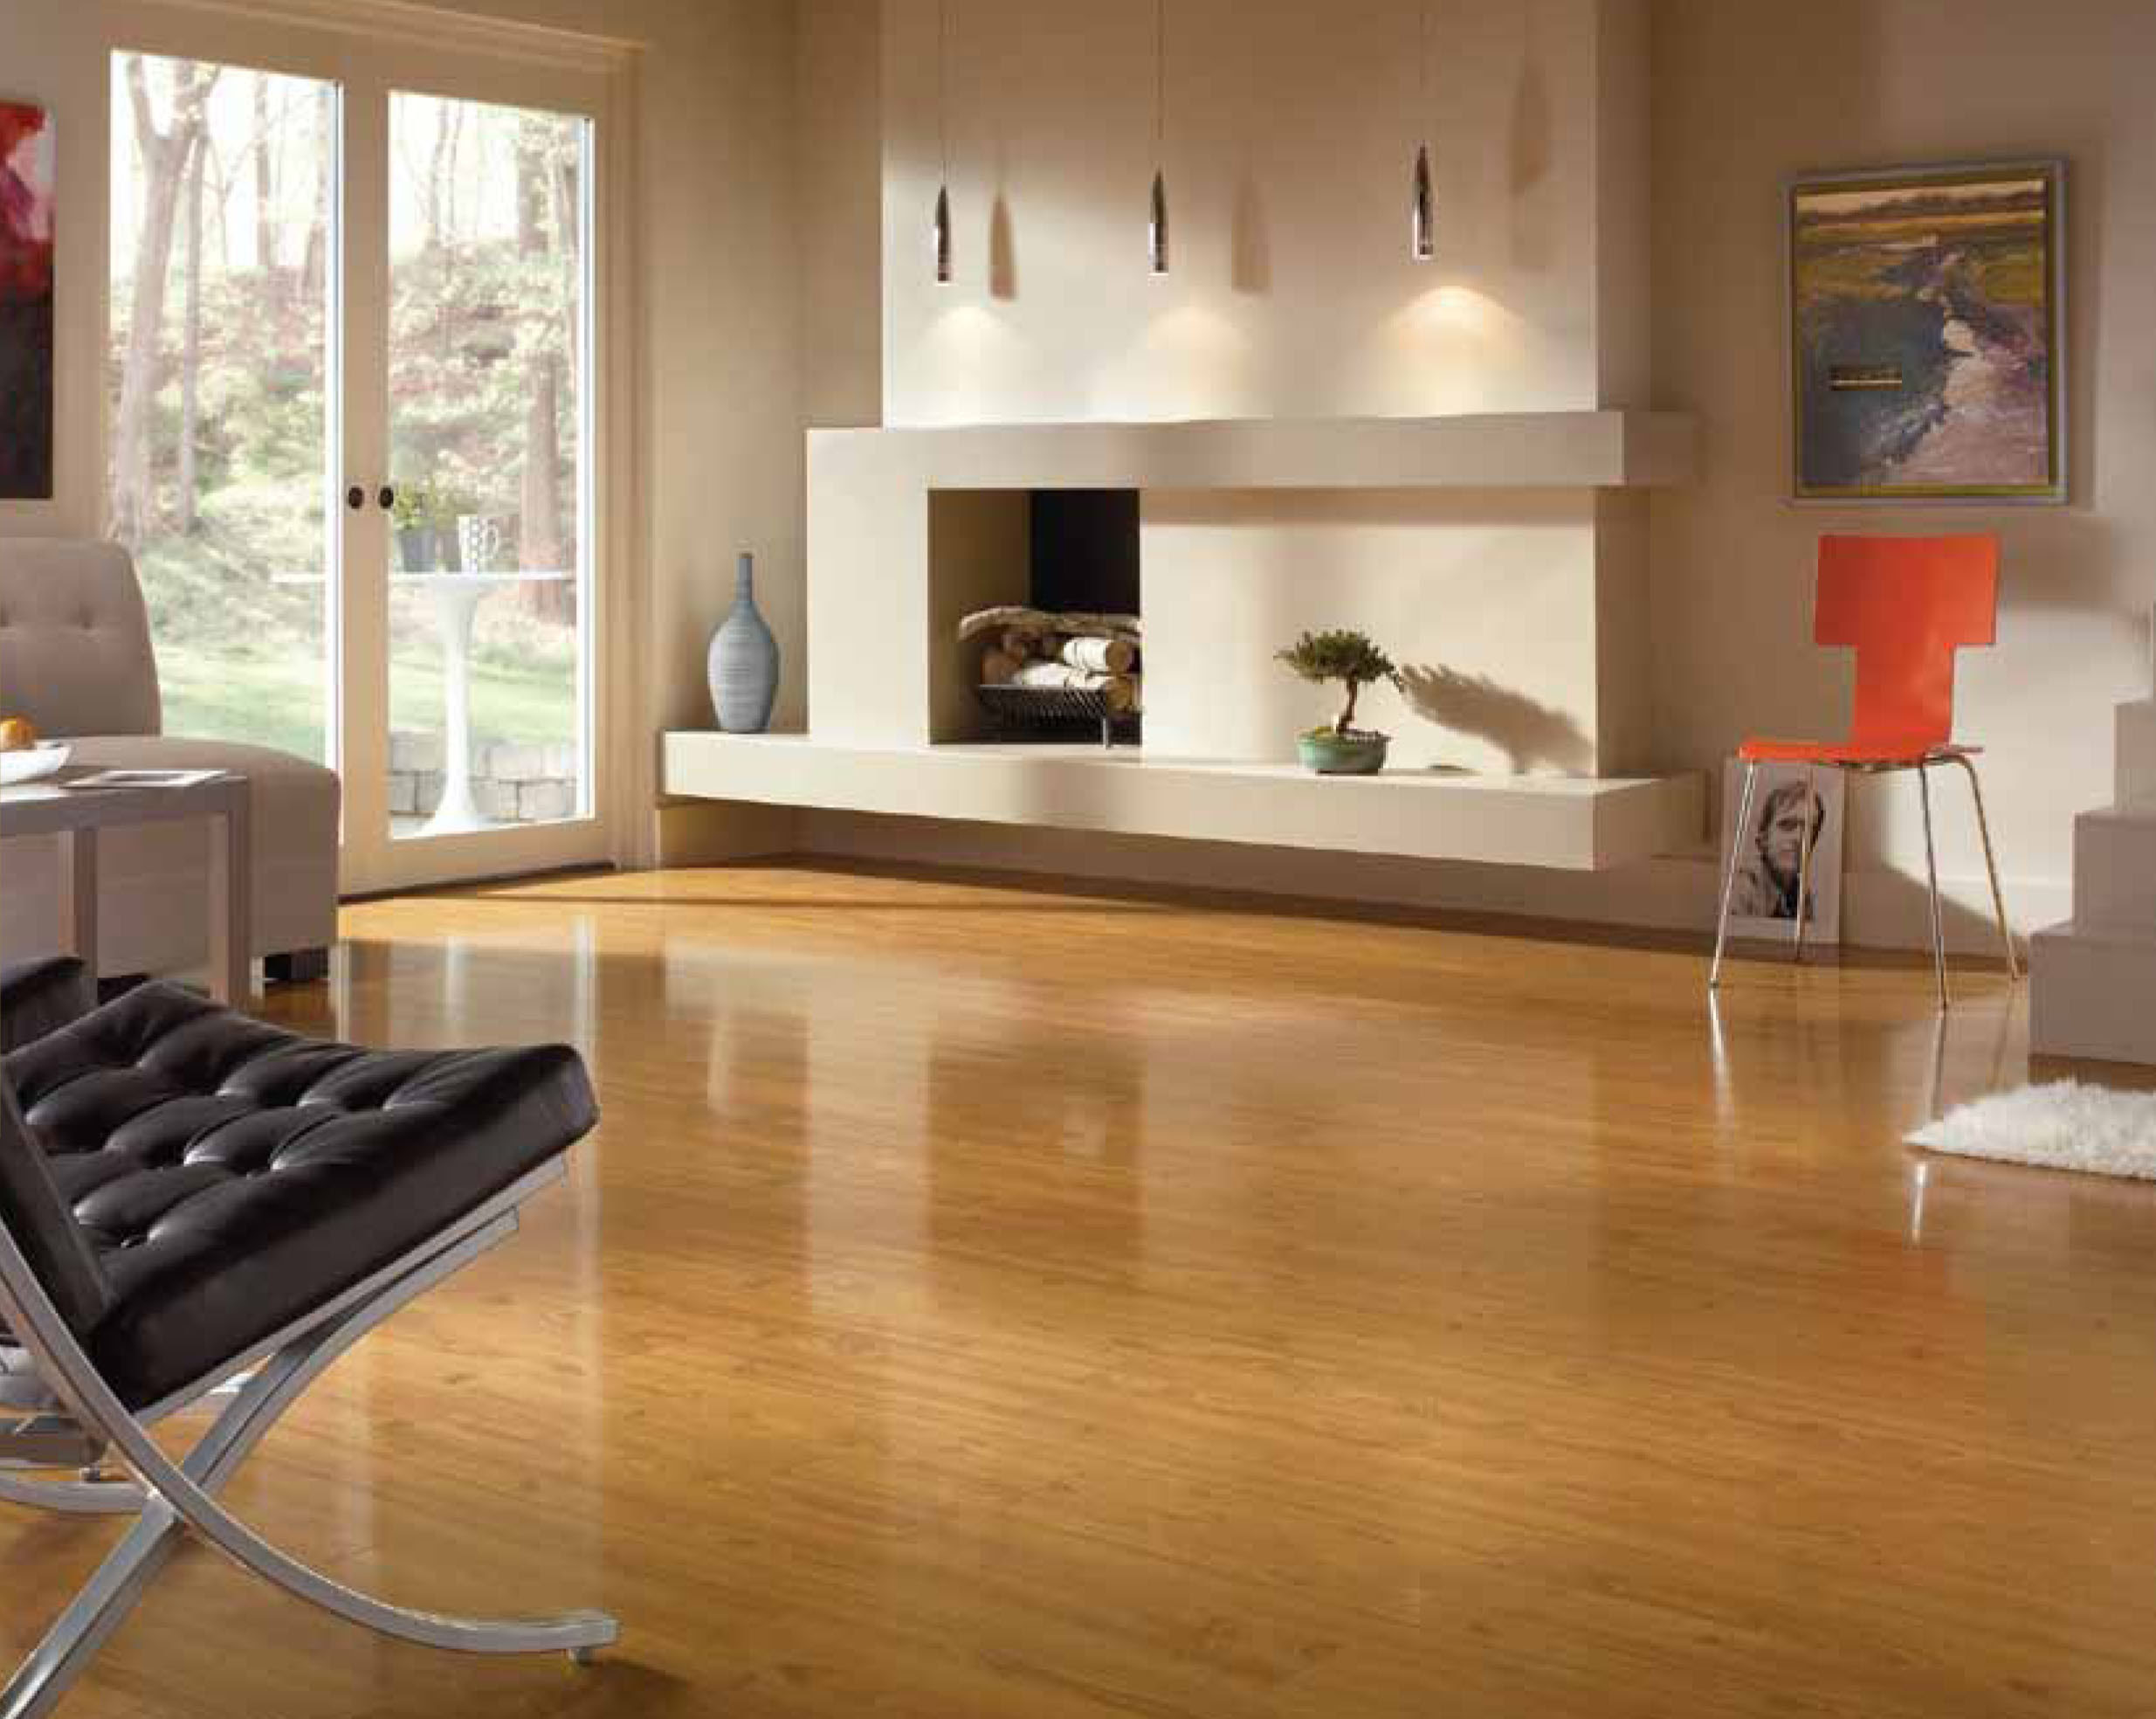 10 Laminated Wooden Flooring Ideas- The Sense Of Comfort ...